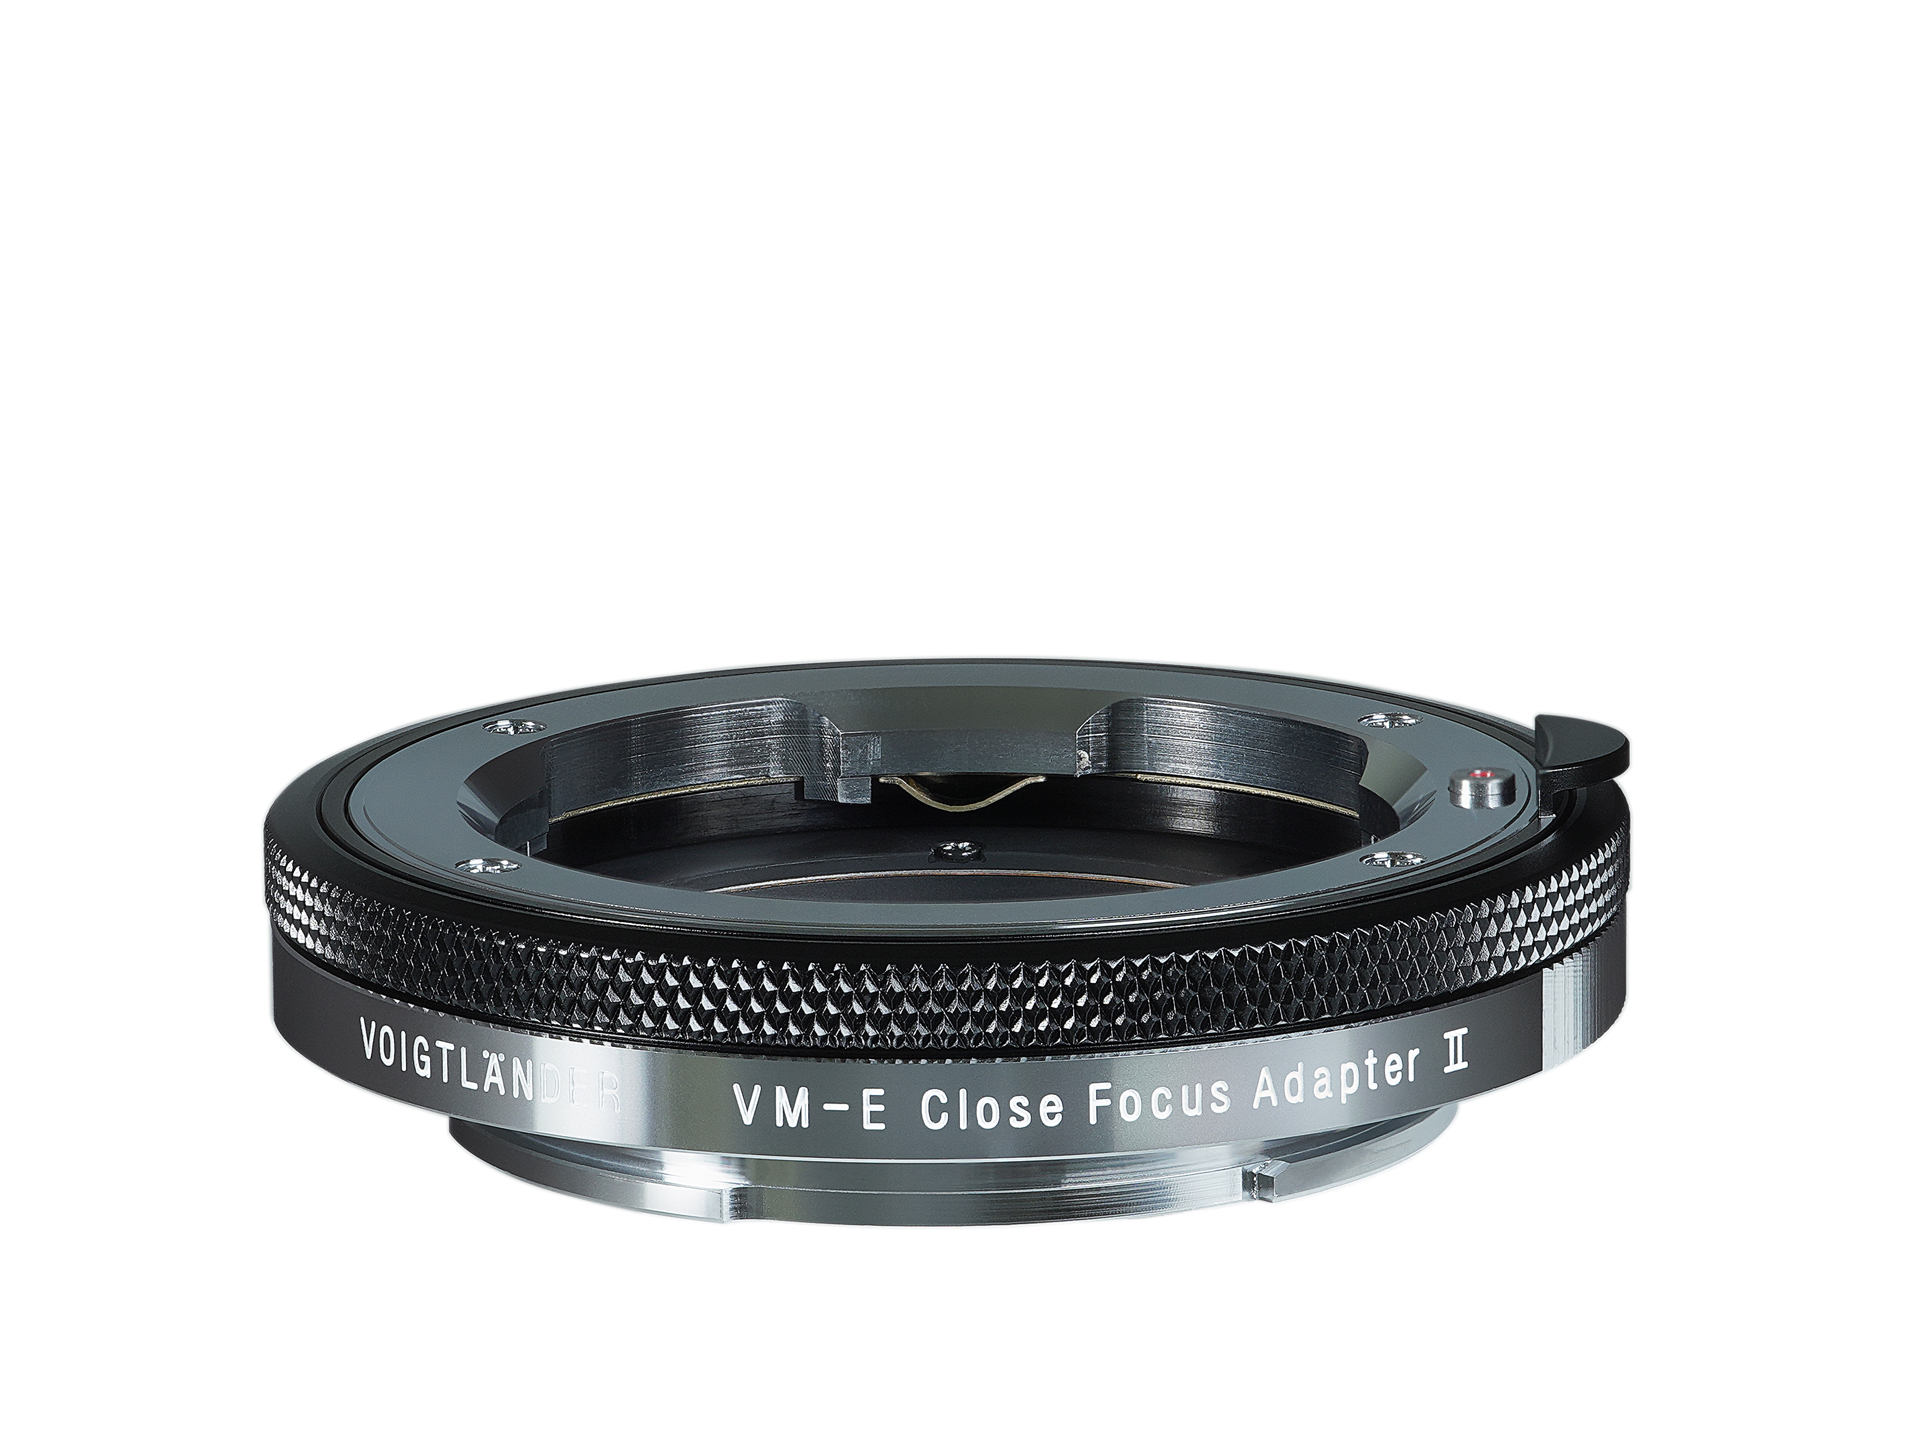 VM-E Close Focus Adapter II - 株式会社コシナ